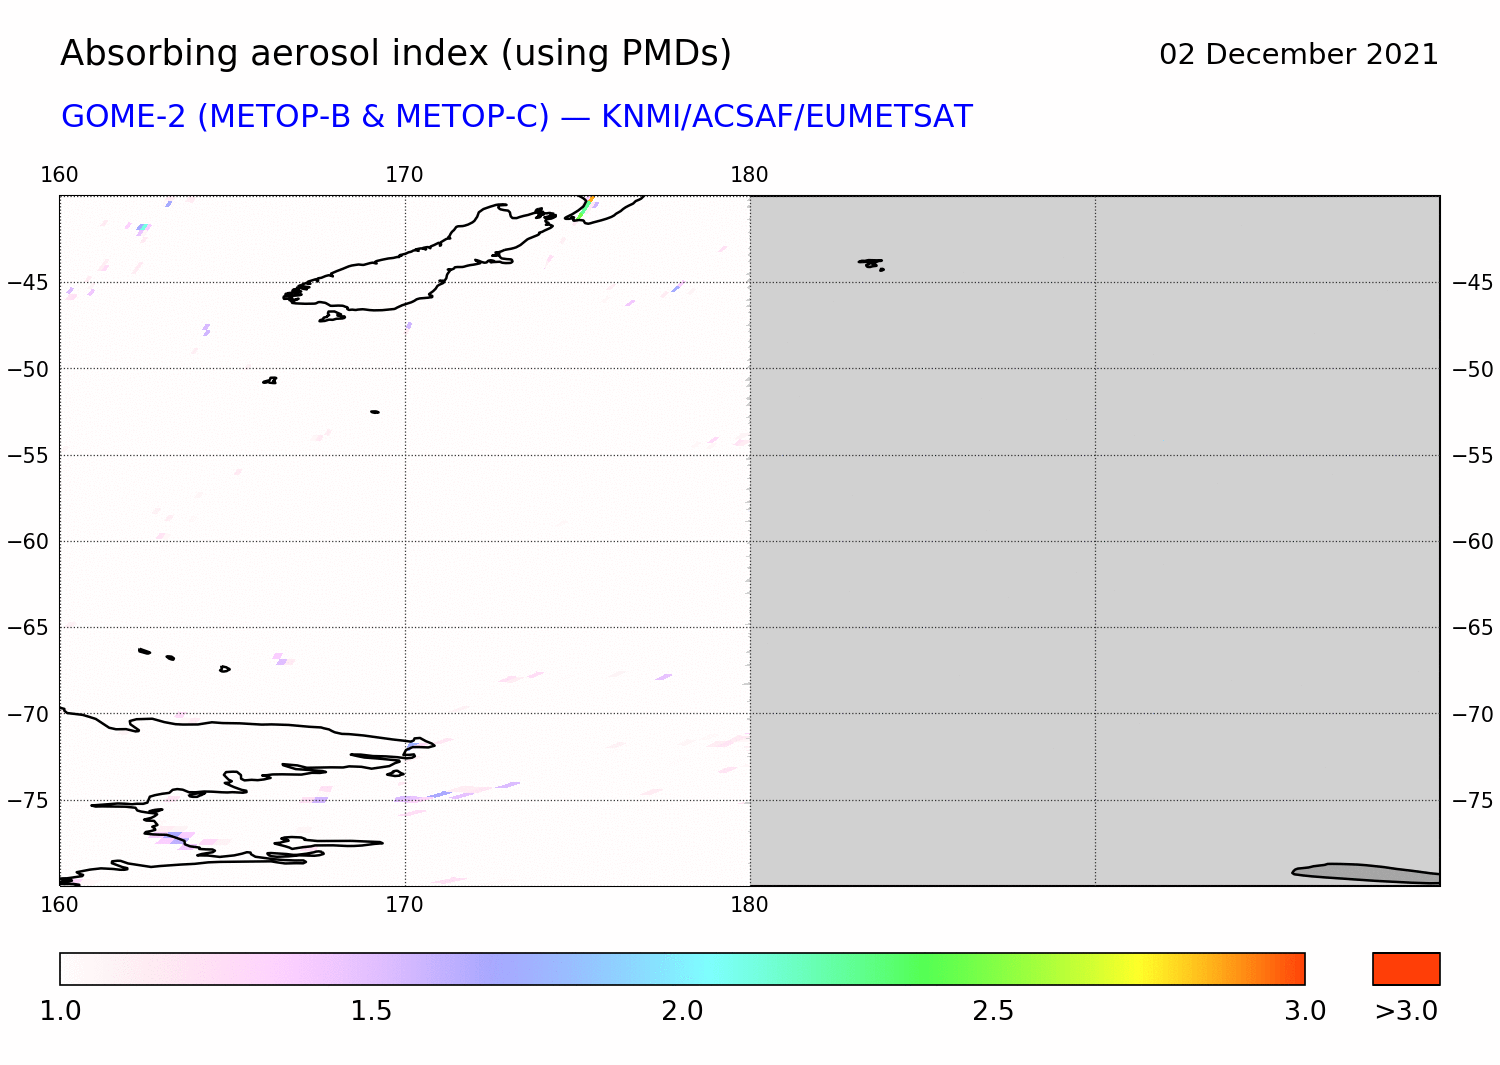 GOME-2 - Absorbing aerosol index of 02 December 2021